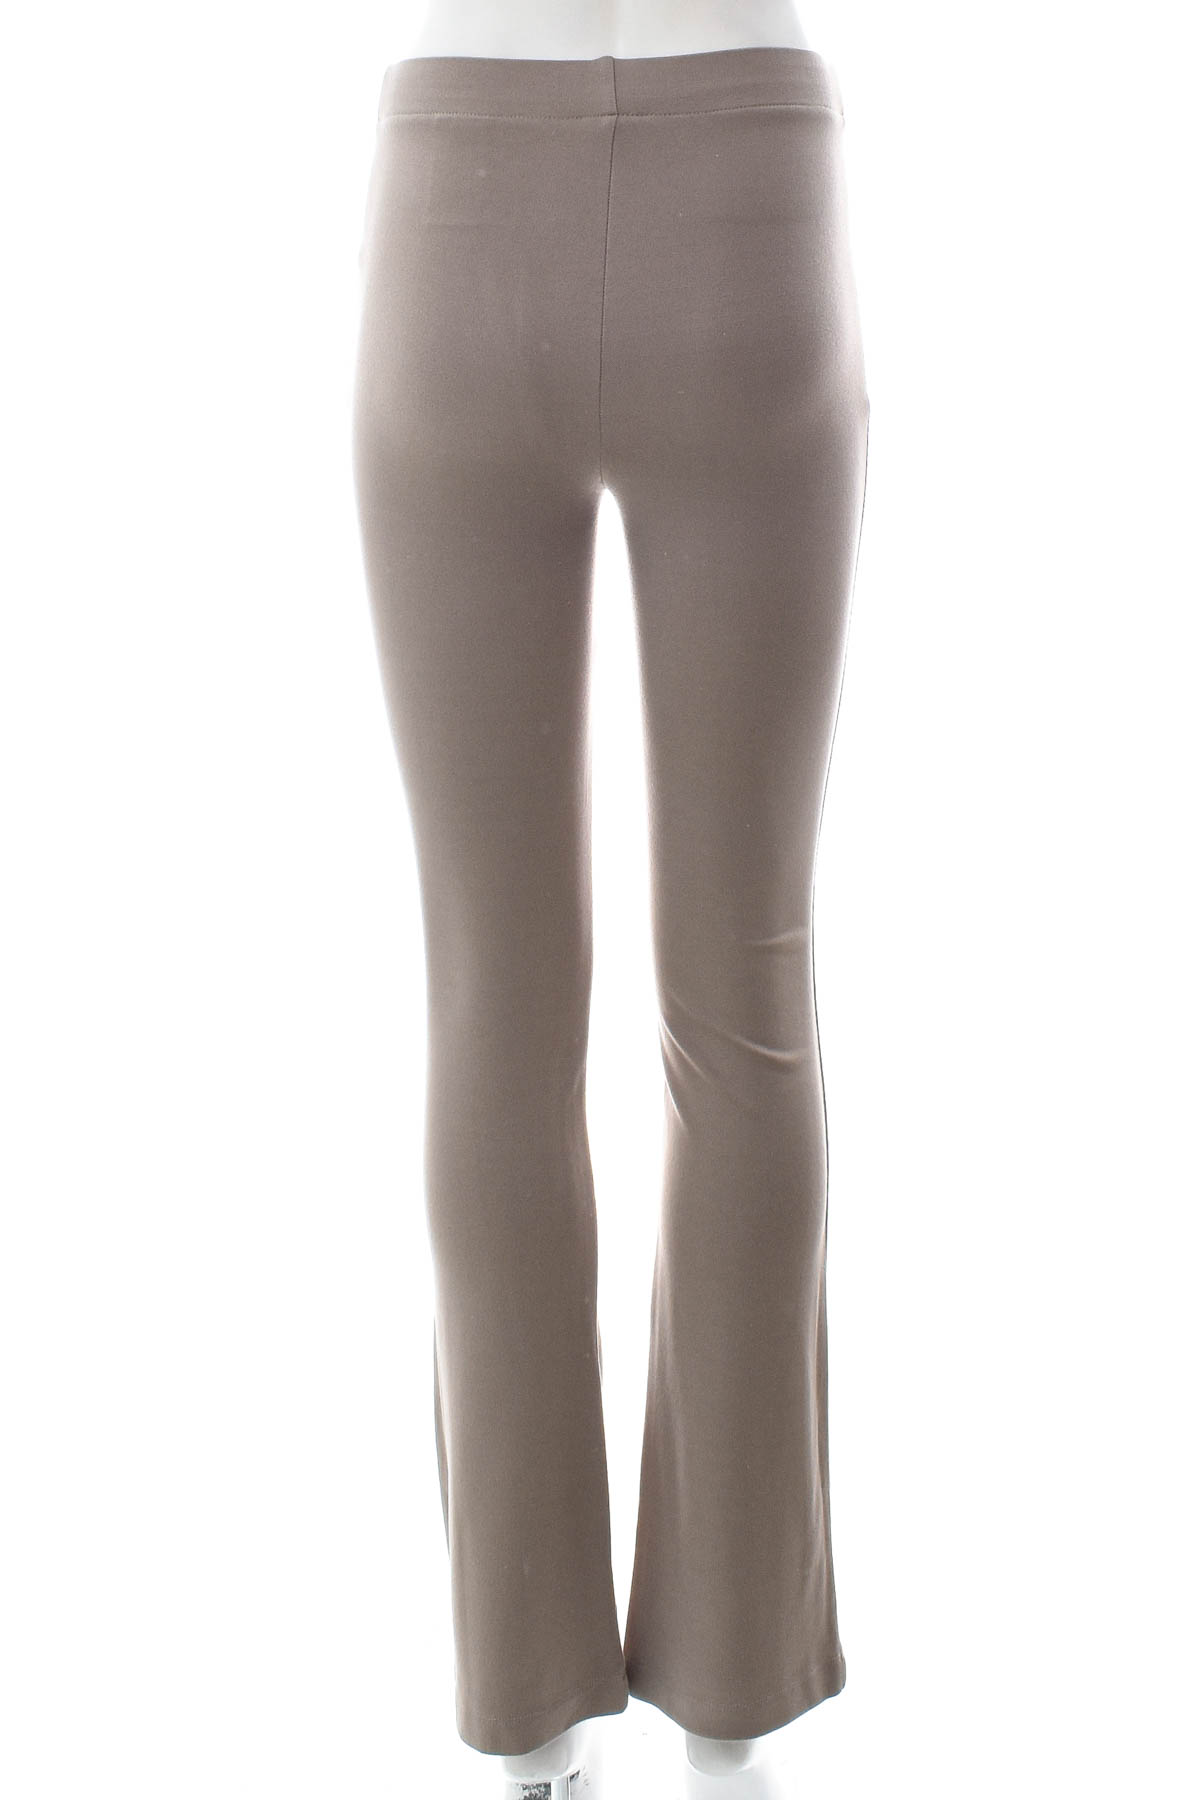 Women's trousers - H&M Basic - 1